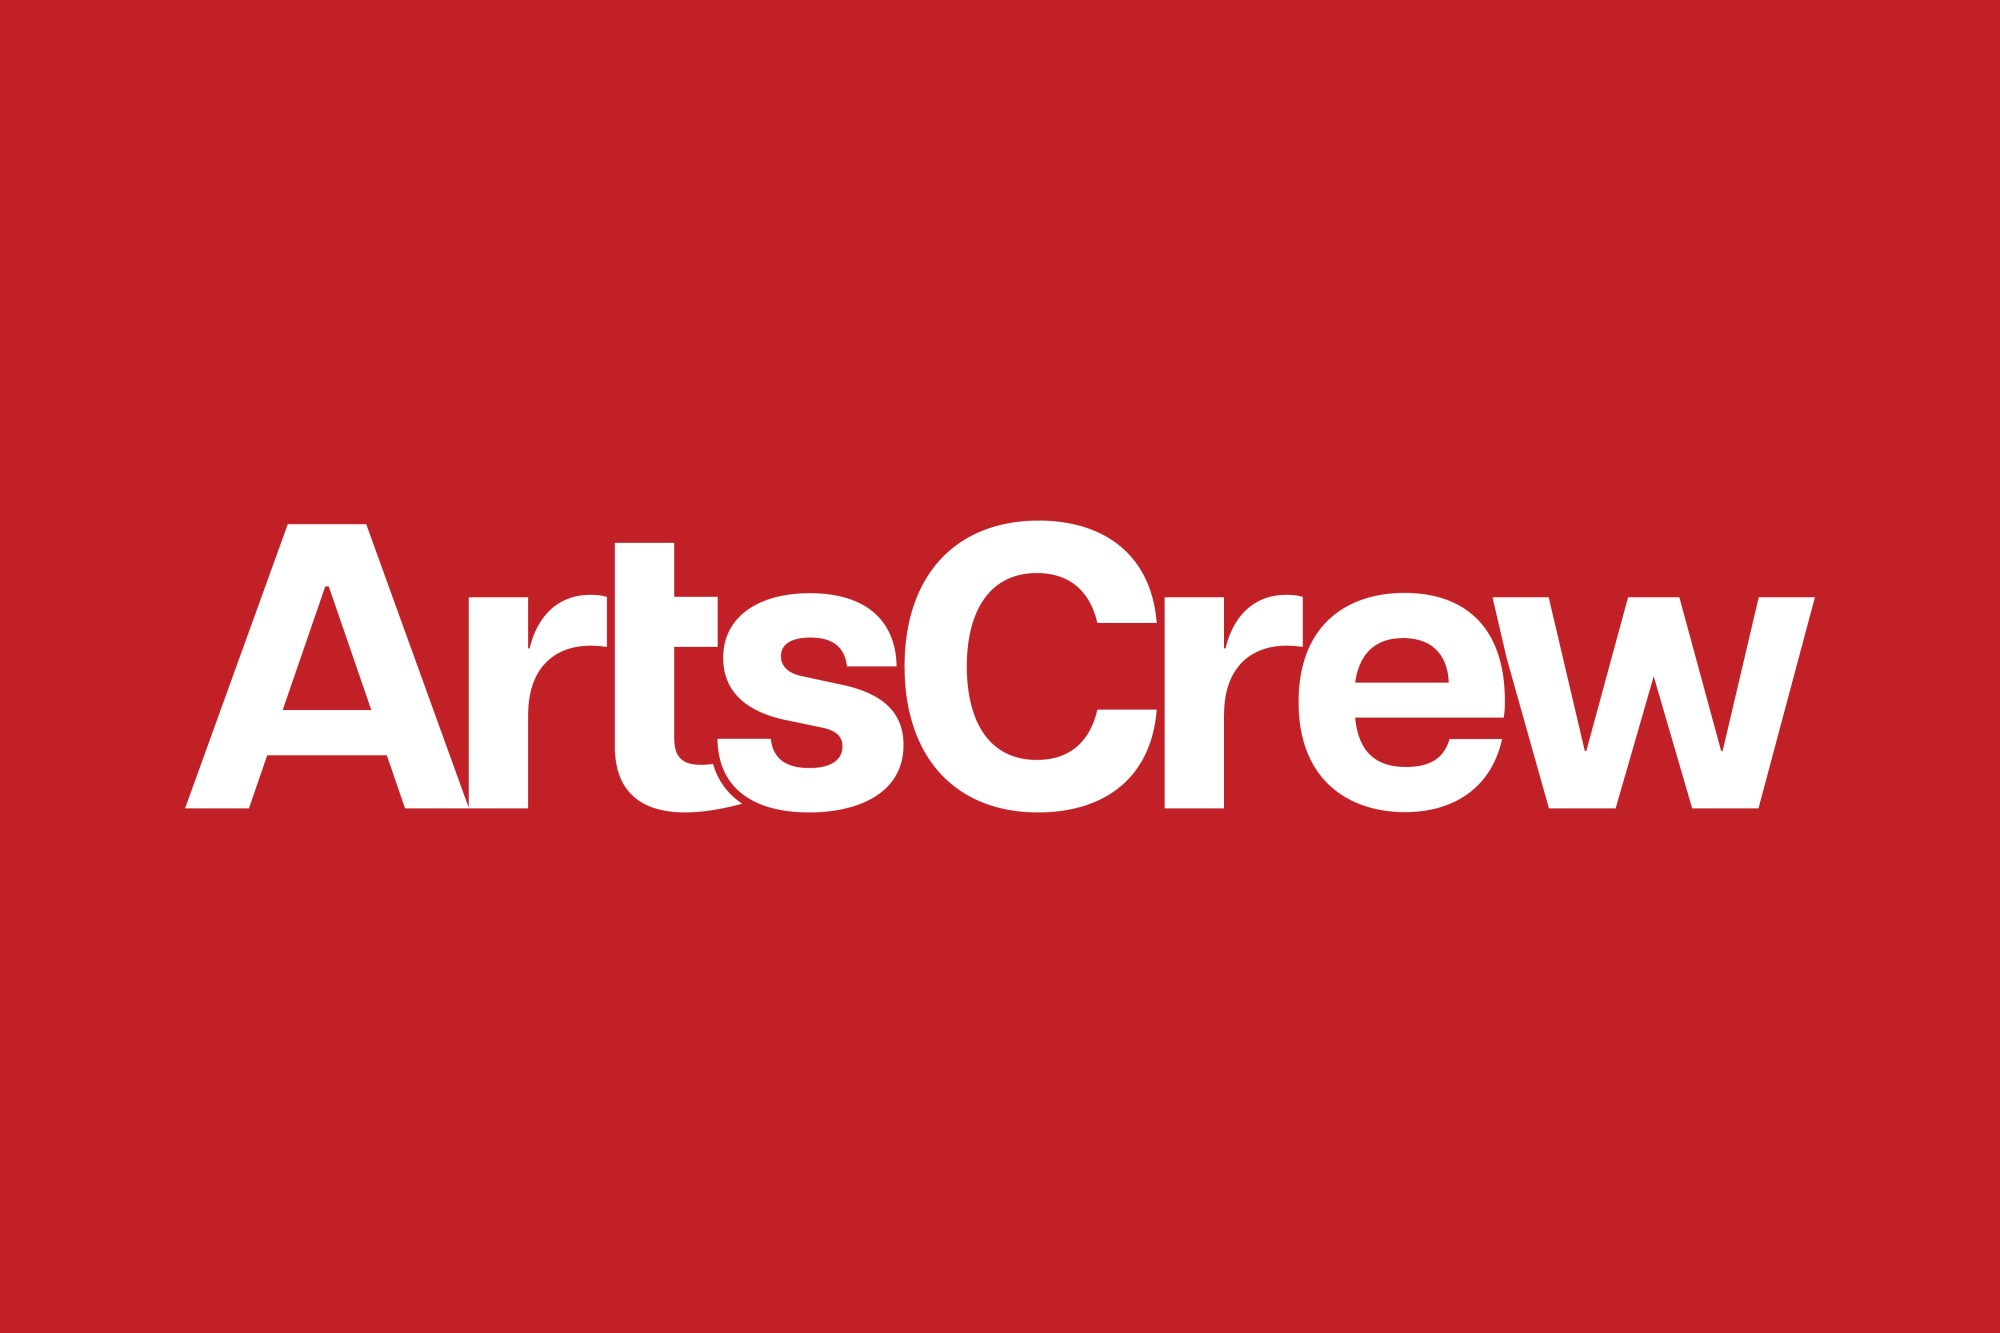 White ArtsCrew logo on a red background